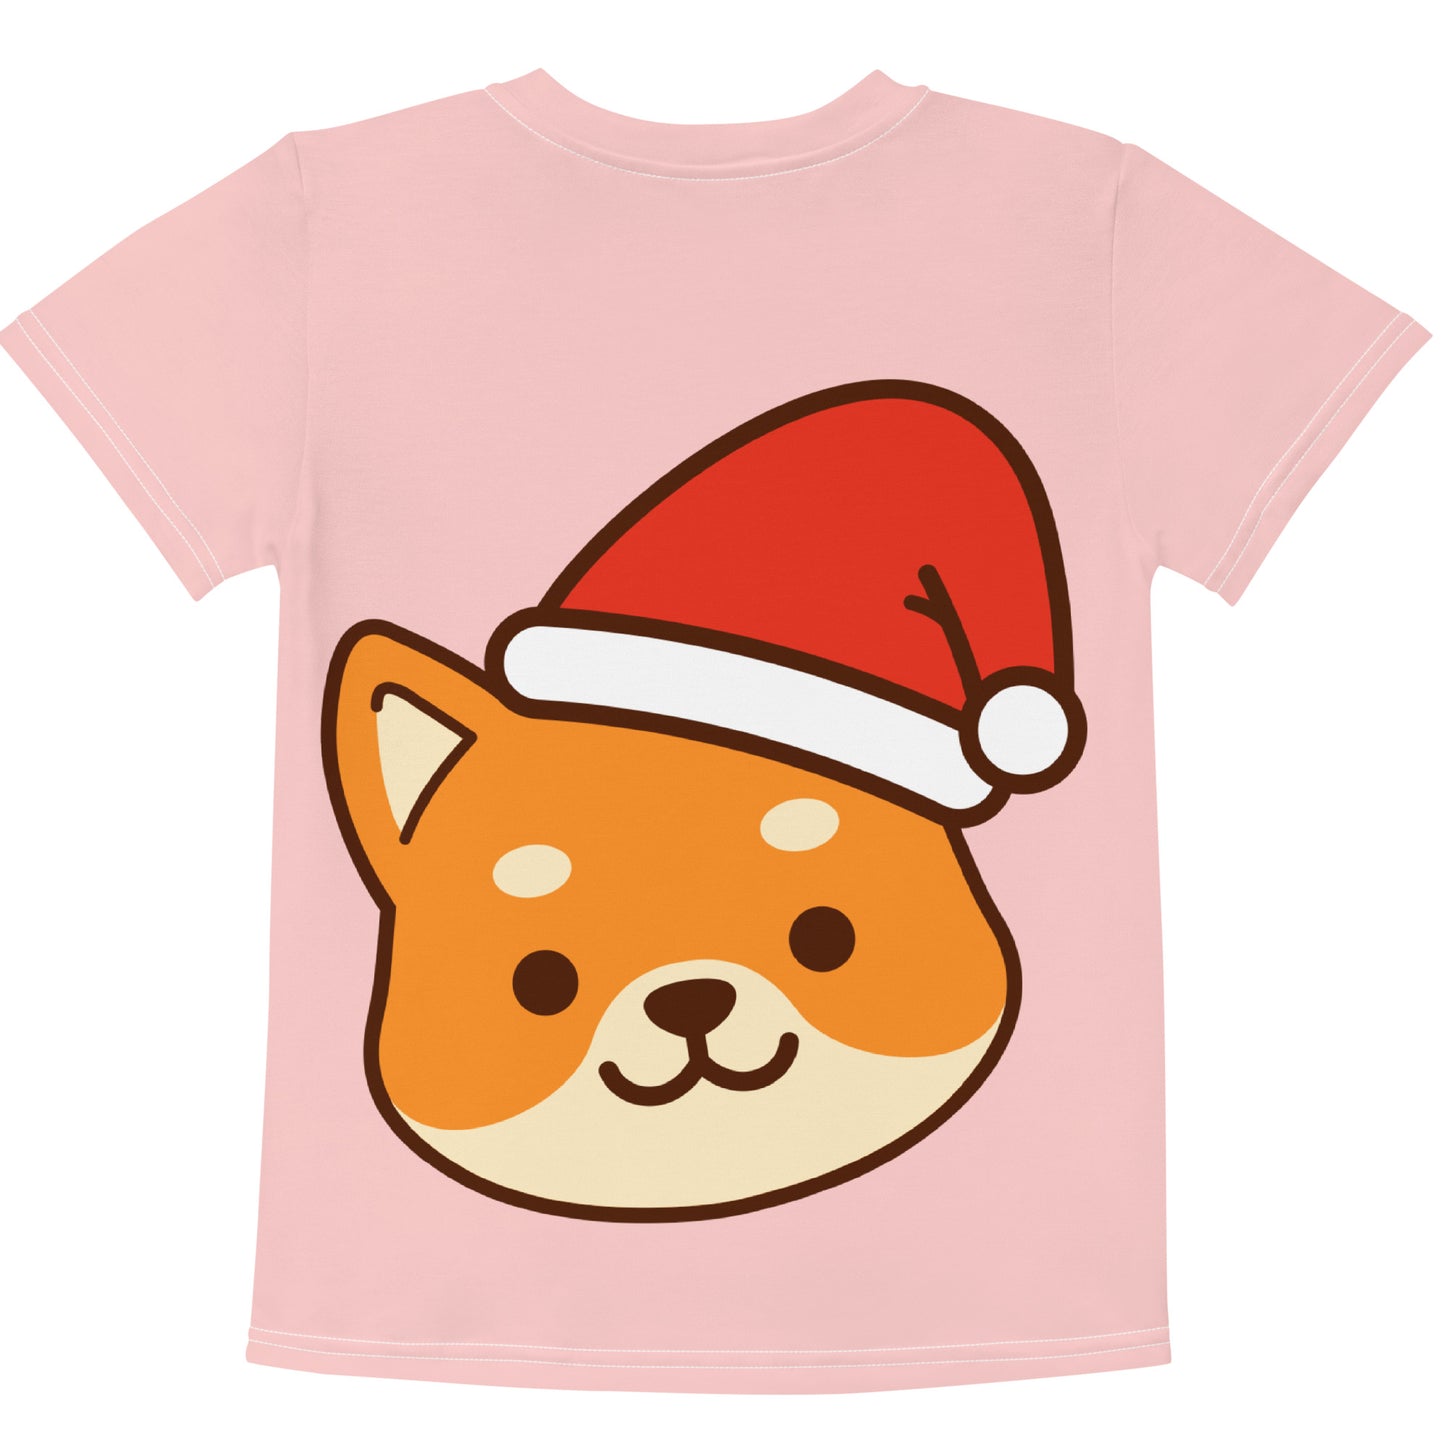 "Christmas" children's t-shirt